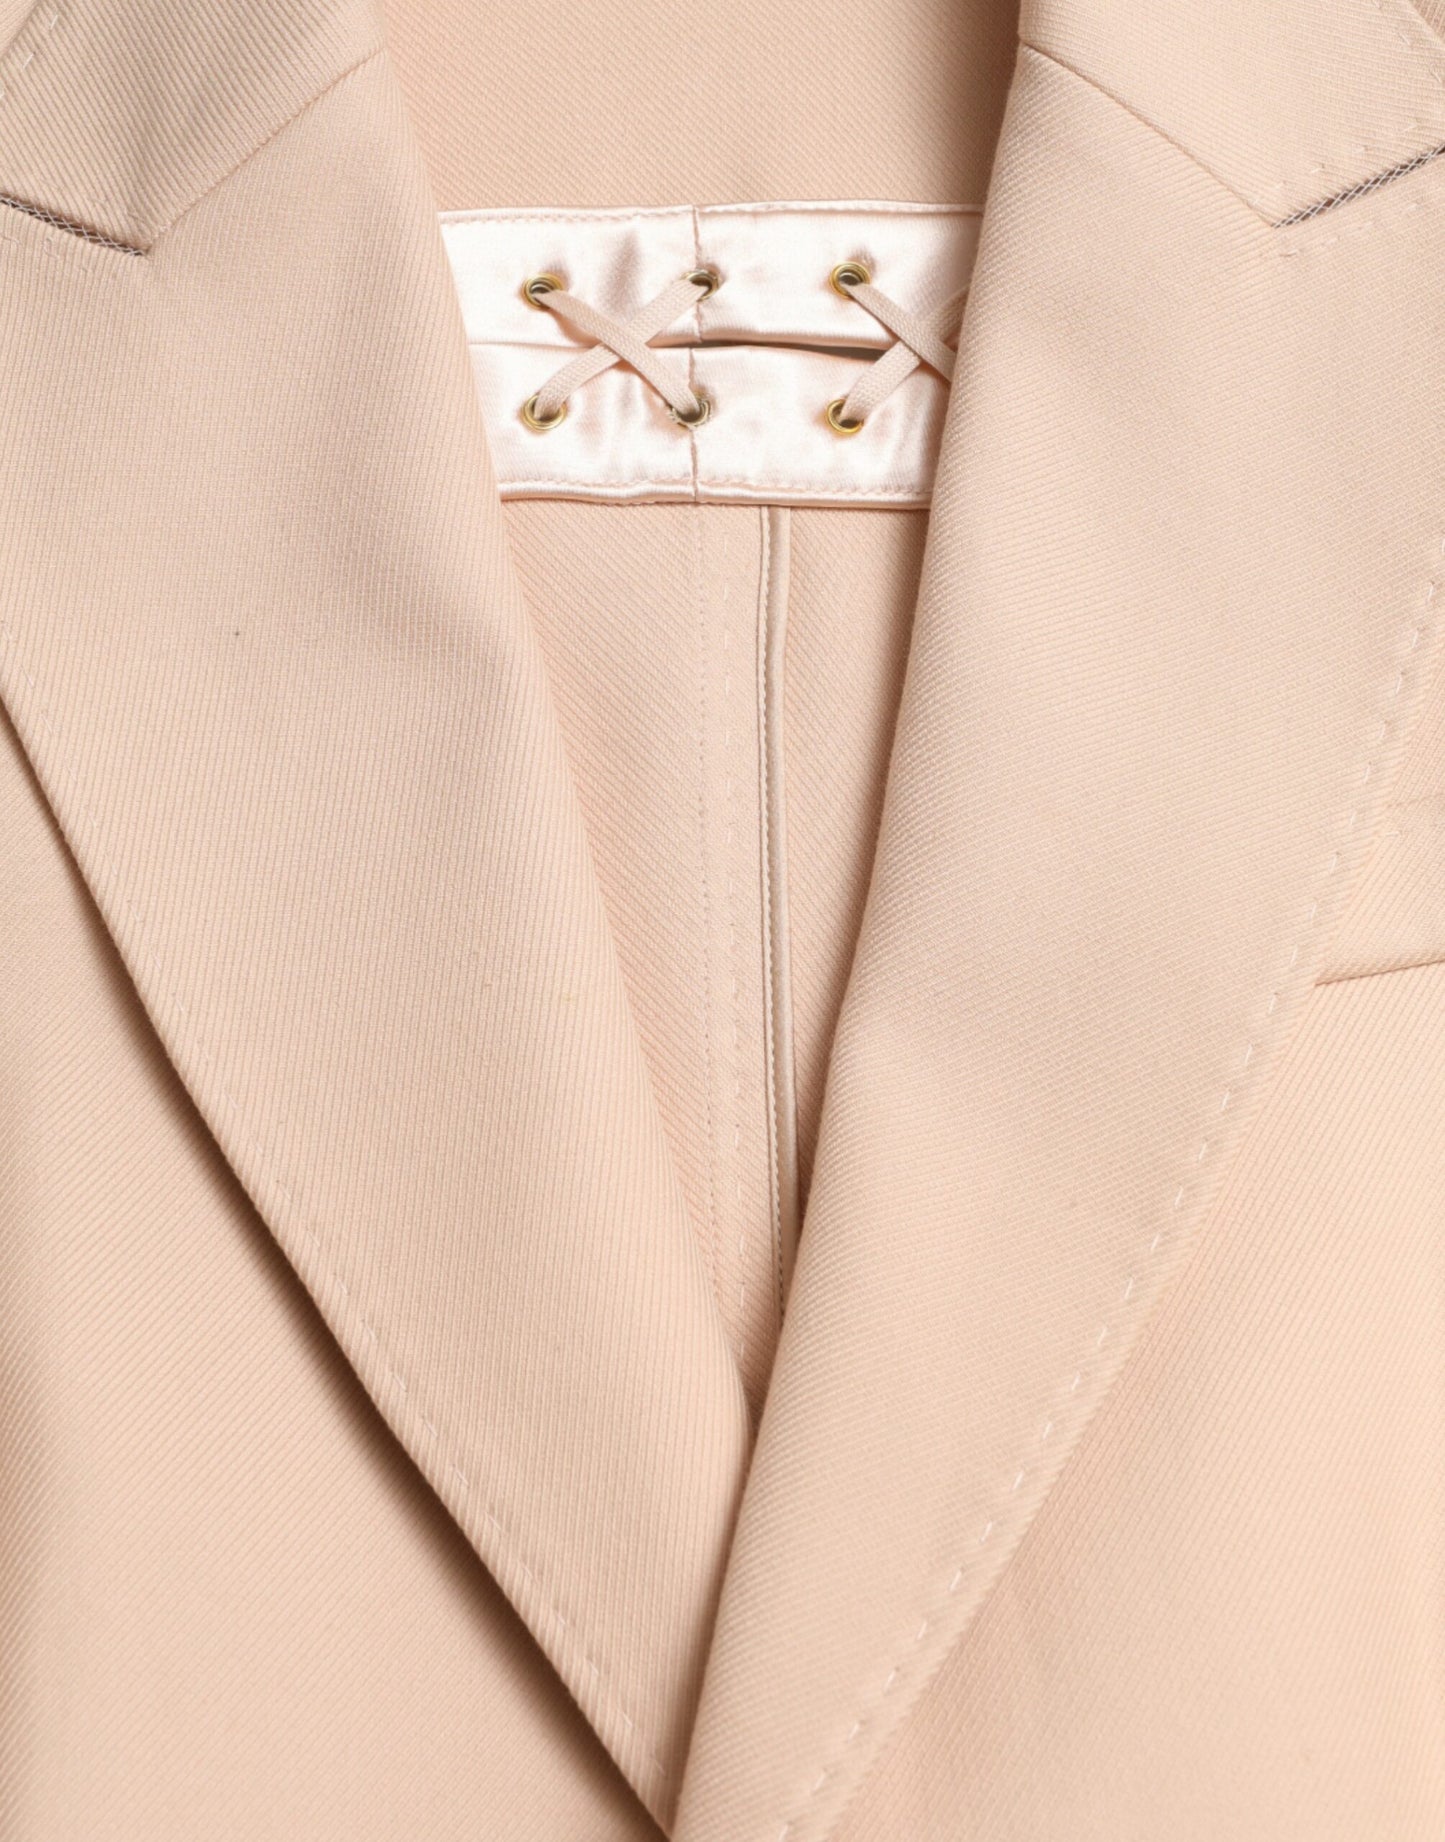 Dolce & Gabbana Beige Single-Breasted Trench Coat Jacket - DEA STILOSA MILANO